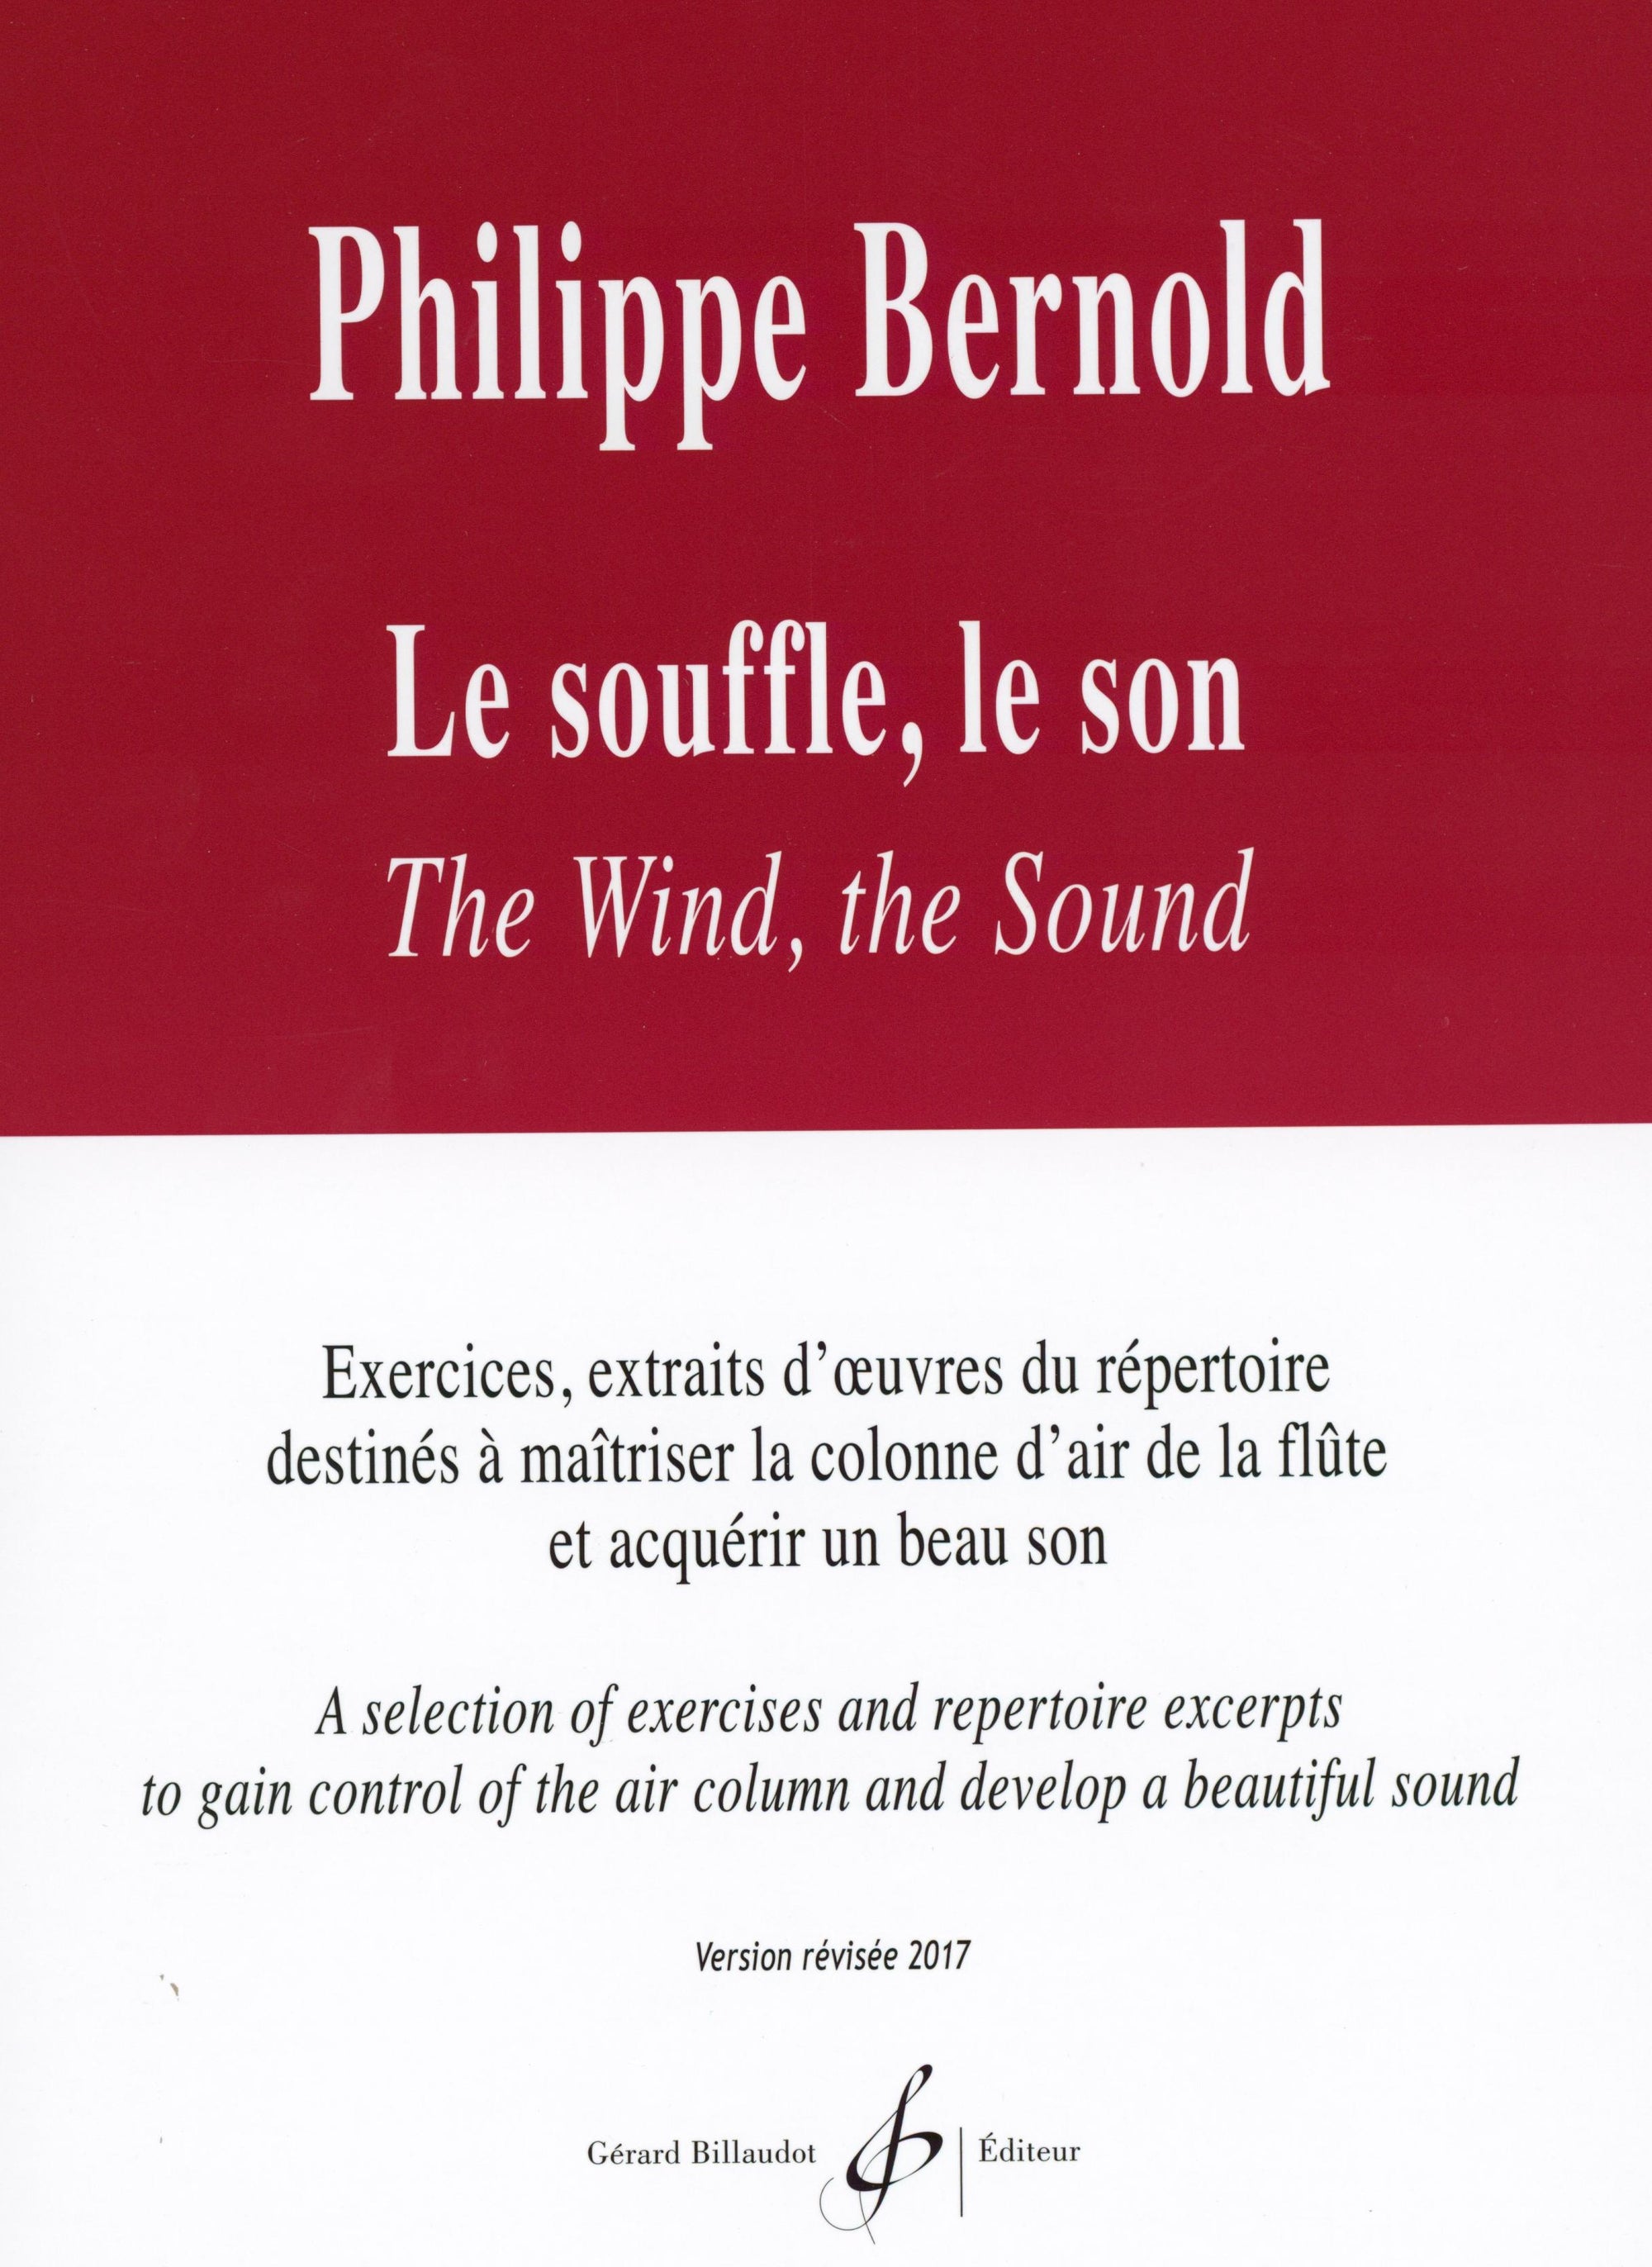 Le souffle, le son (The Wind, the Sound)